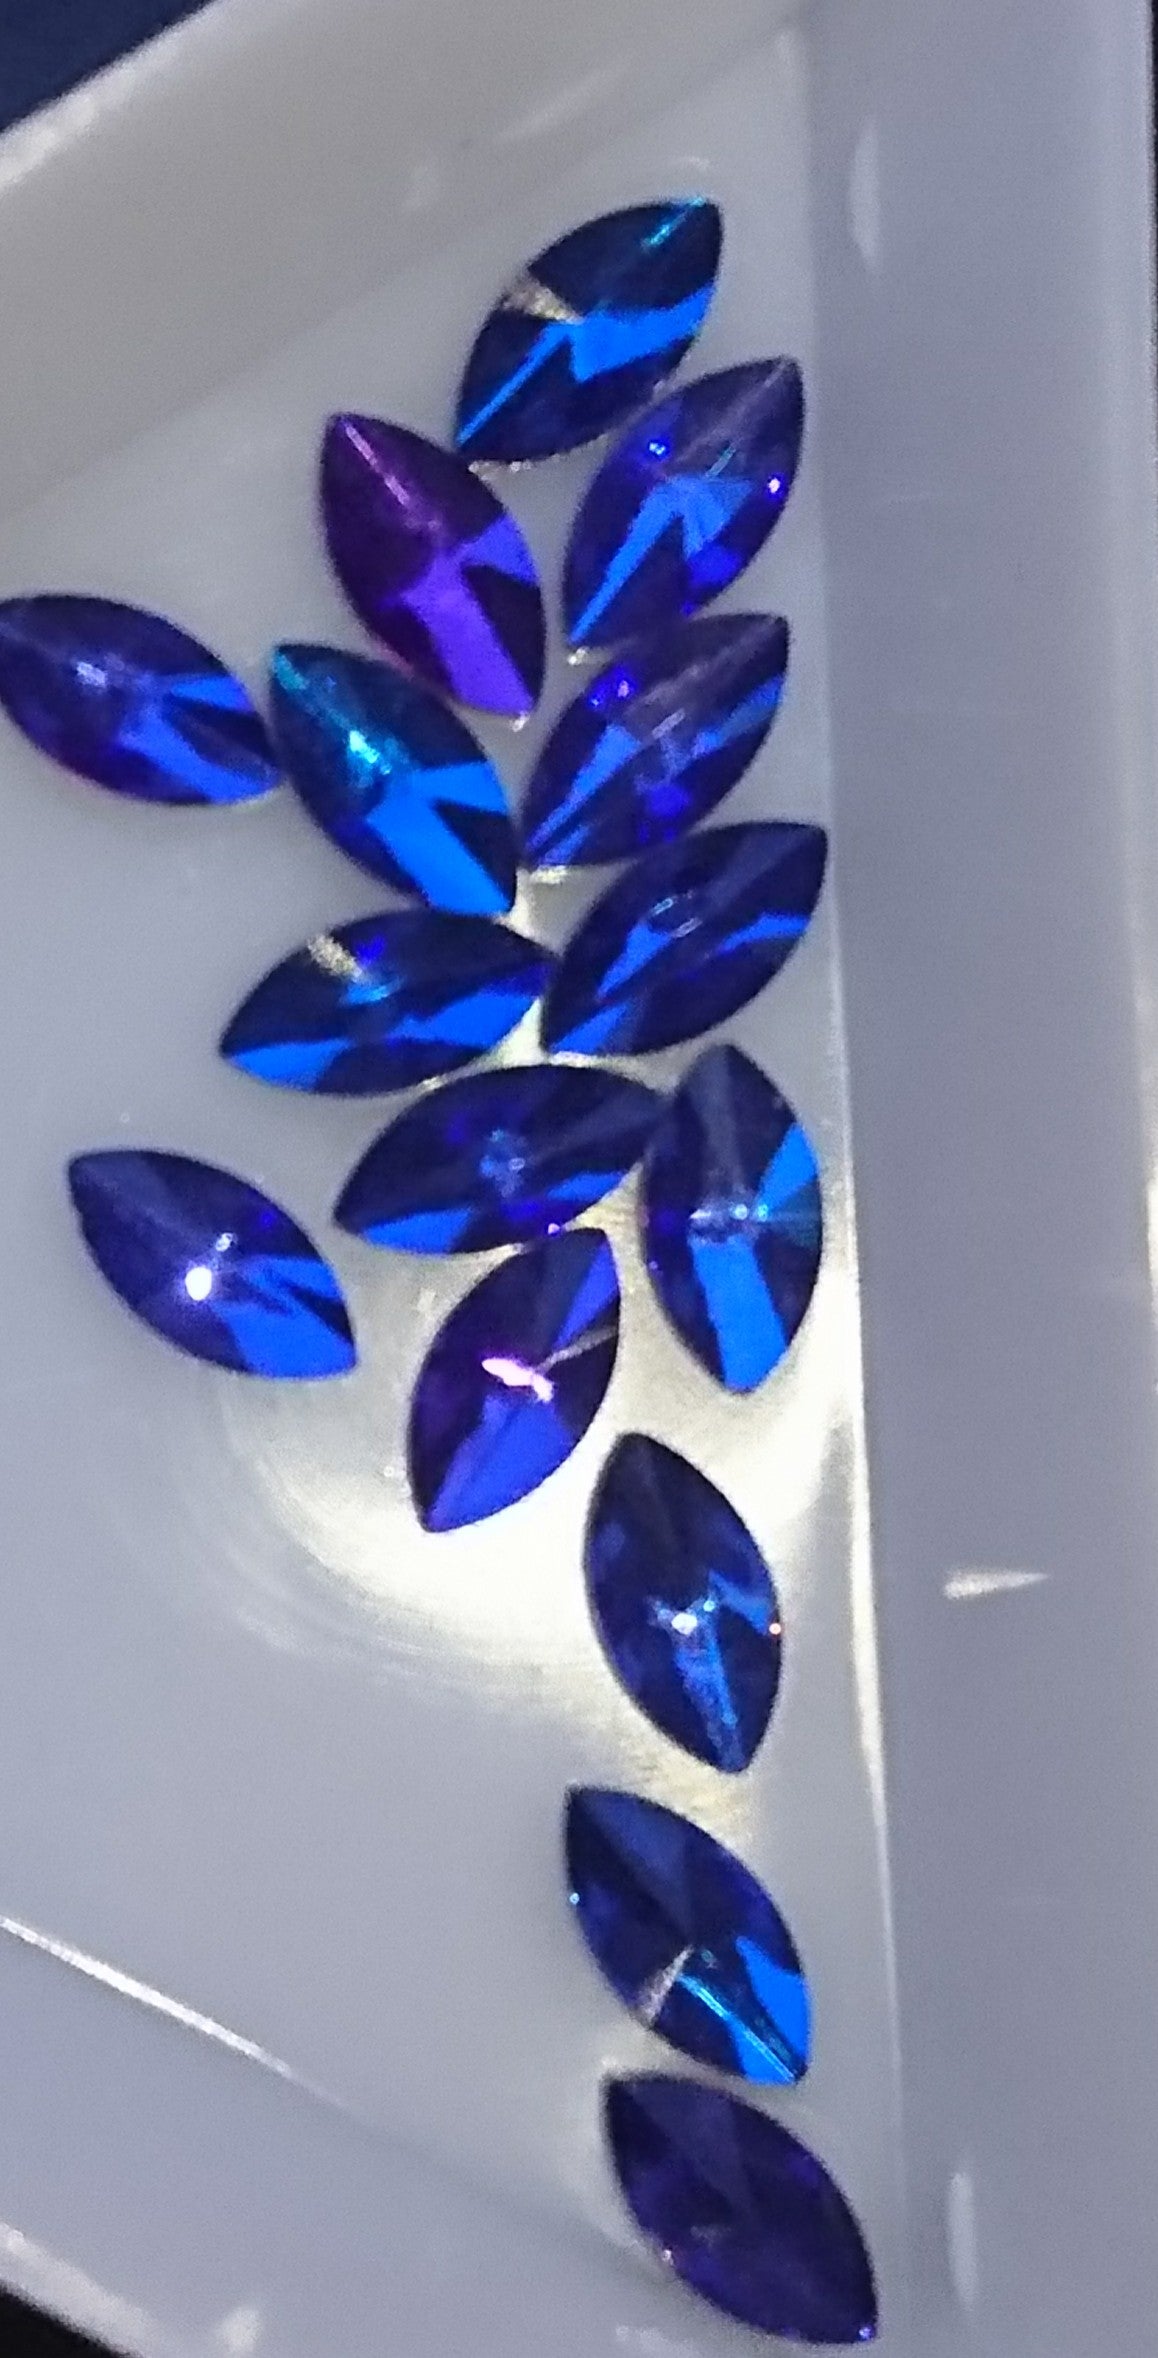 Oval rainbow crystals - Nirvana Nail and Beauty Supplies 